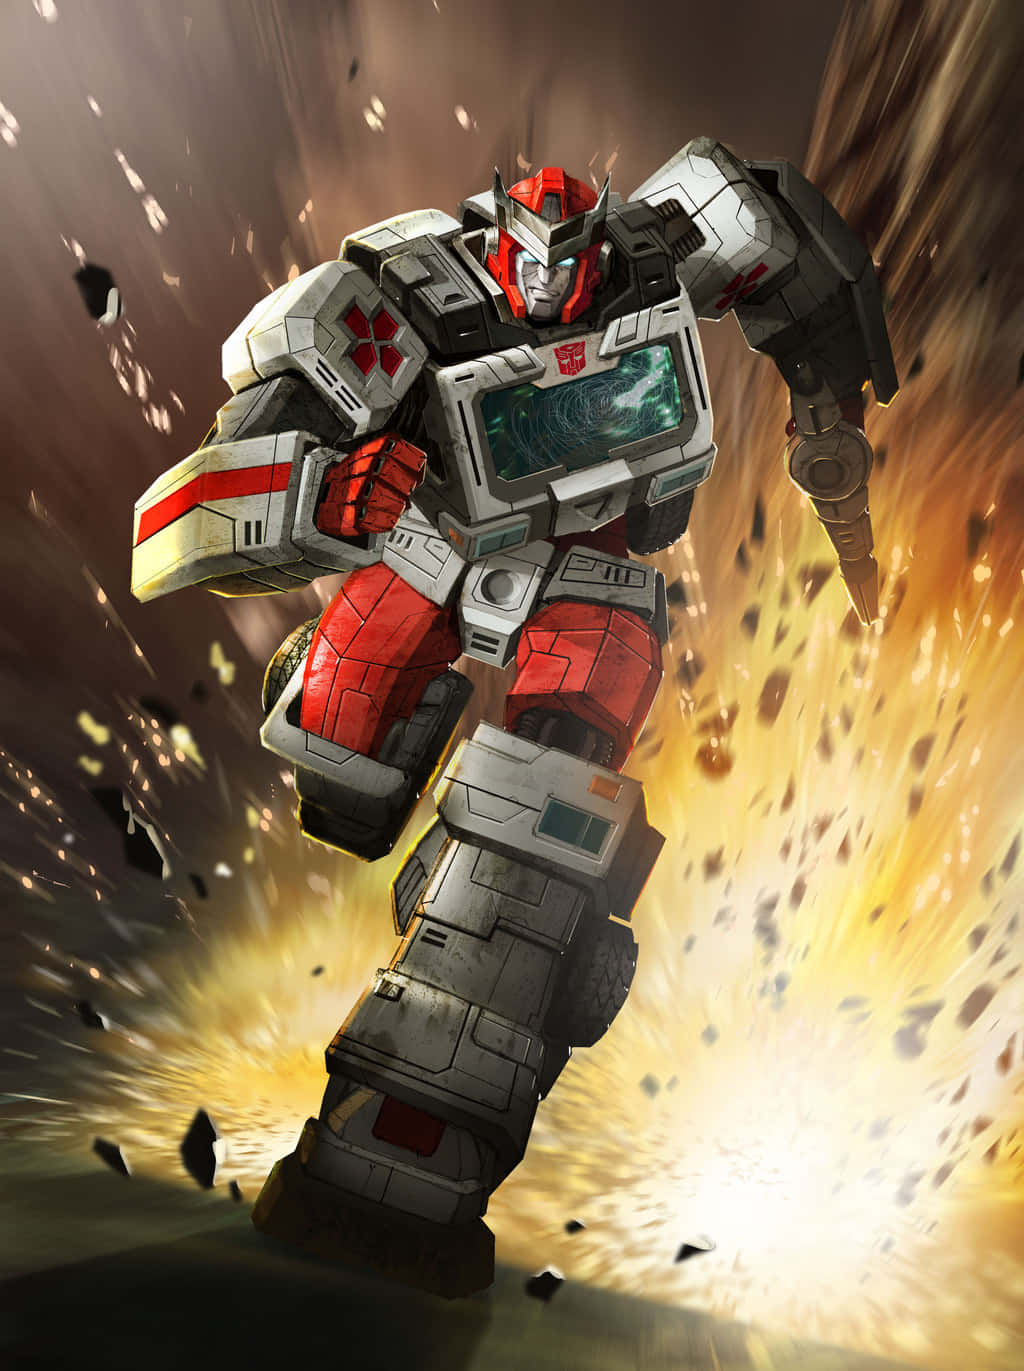 •optimus Prime Leder Autobotarna I Kampen Mot Decepticons.